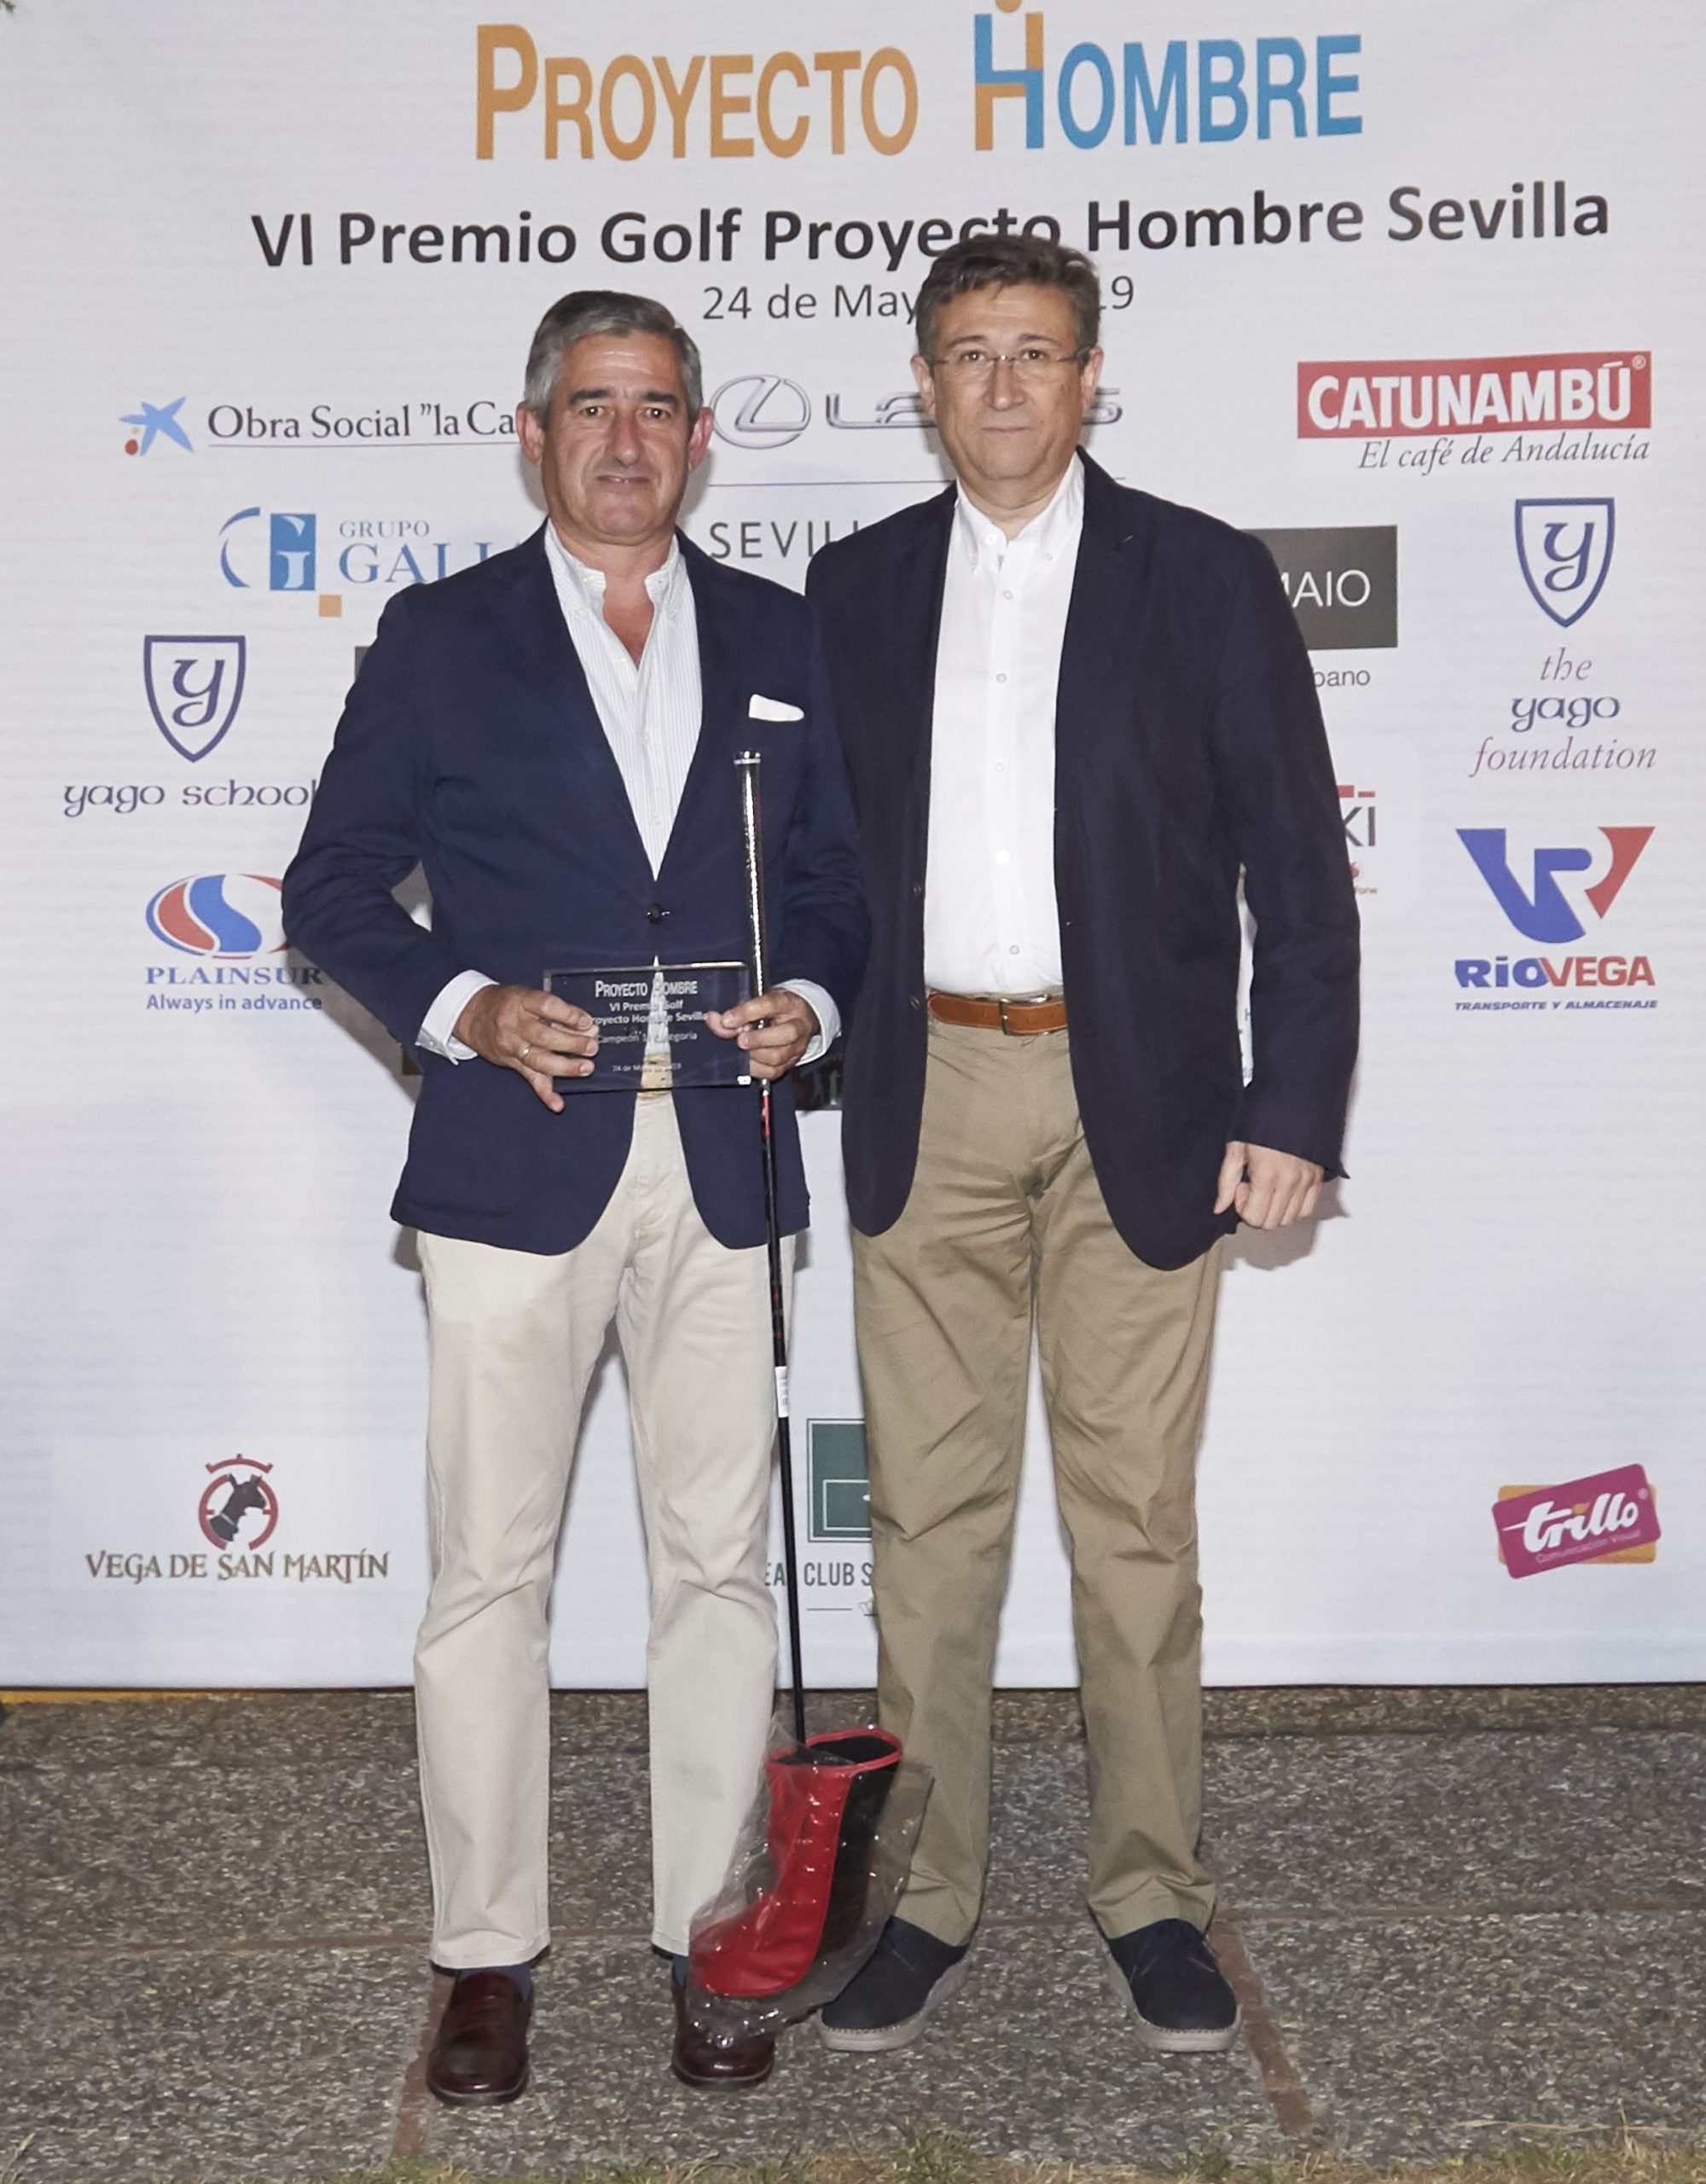 VI Torneo de Golf de Proyecto Hombre en el Real Club Sevilla Golf